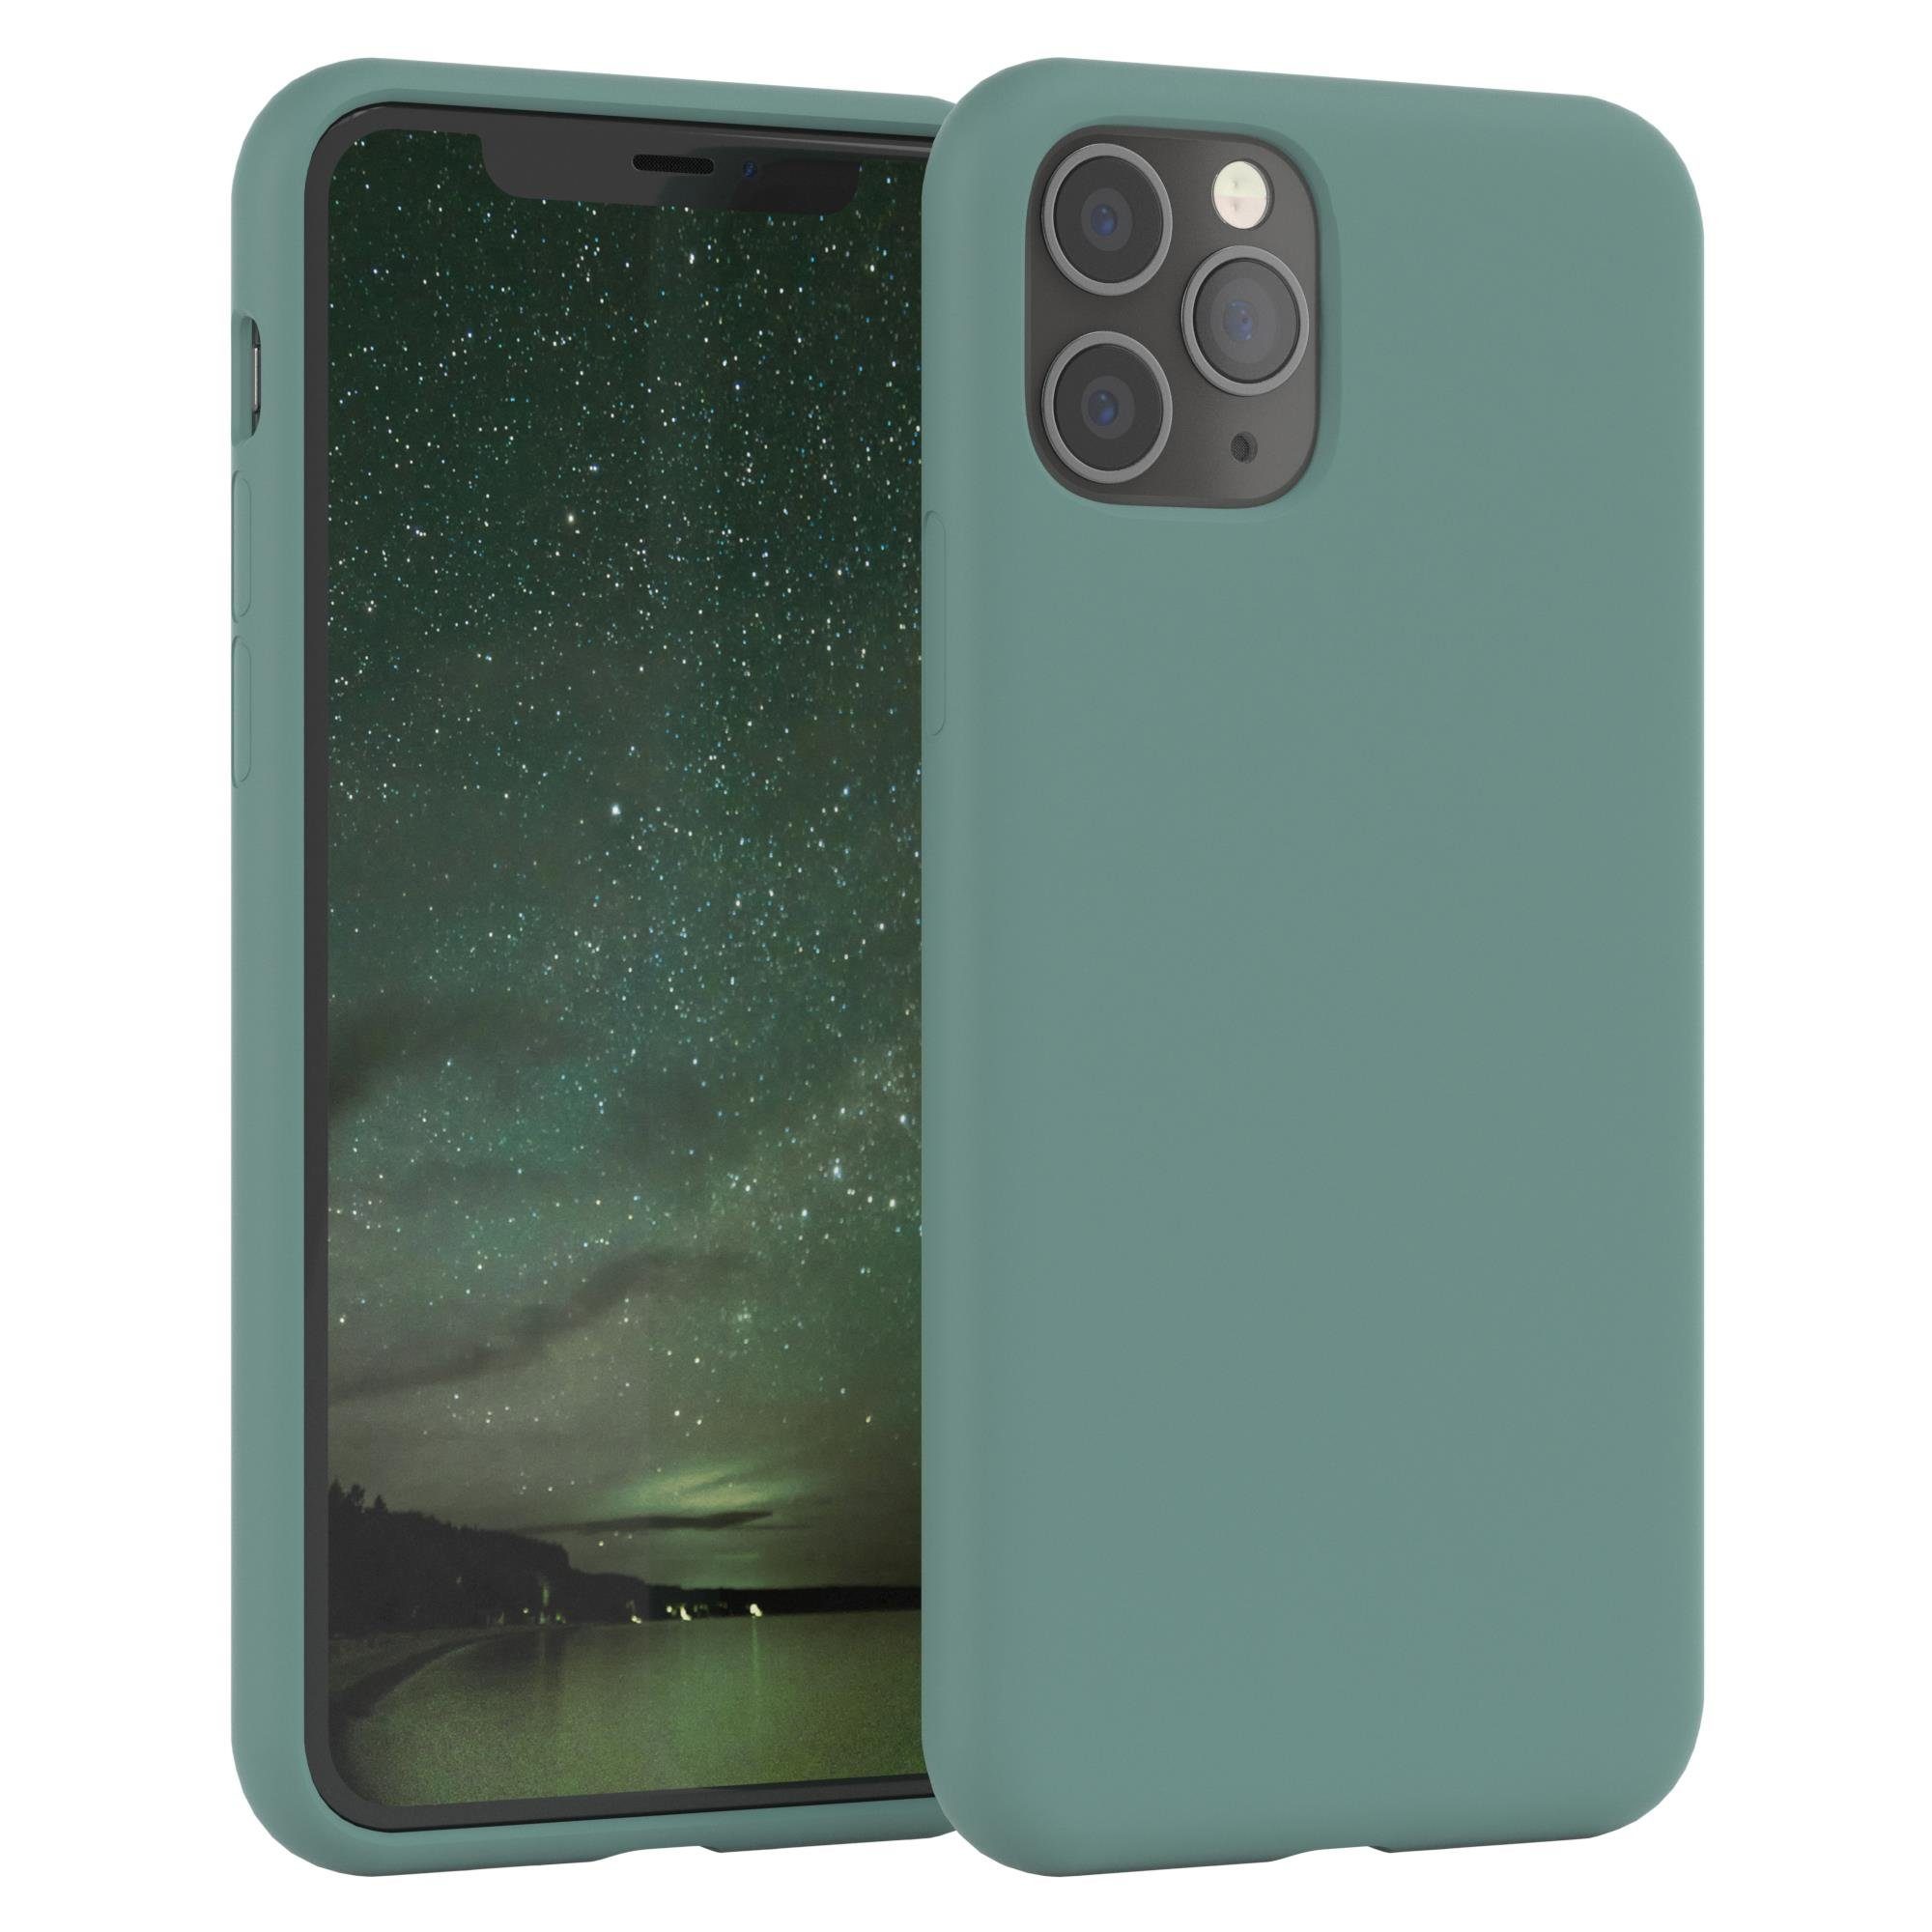 EAZY CASE Handyhülle Premium Silikon Case für Apple iPhone 11 Pro 5,8 Zoll, Silikonhülle Slimcover mit Displayschutz Hülle Cover Grün / Nachtgrün